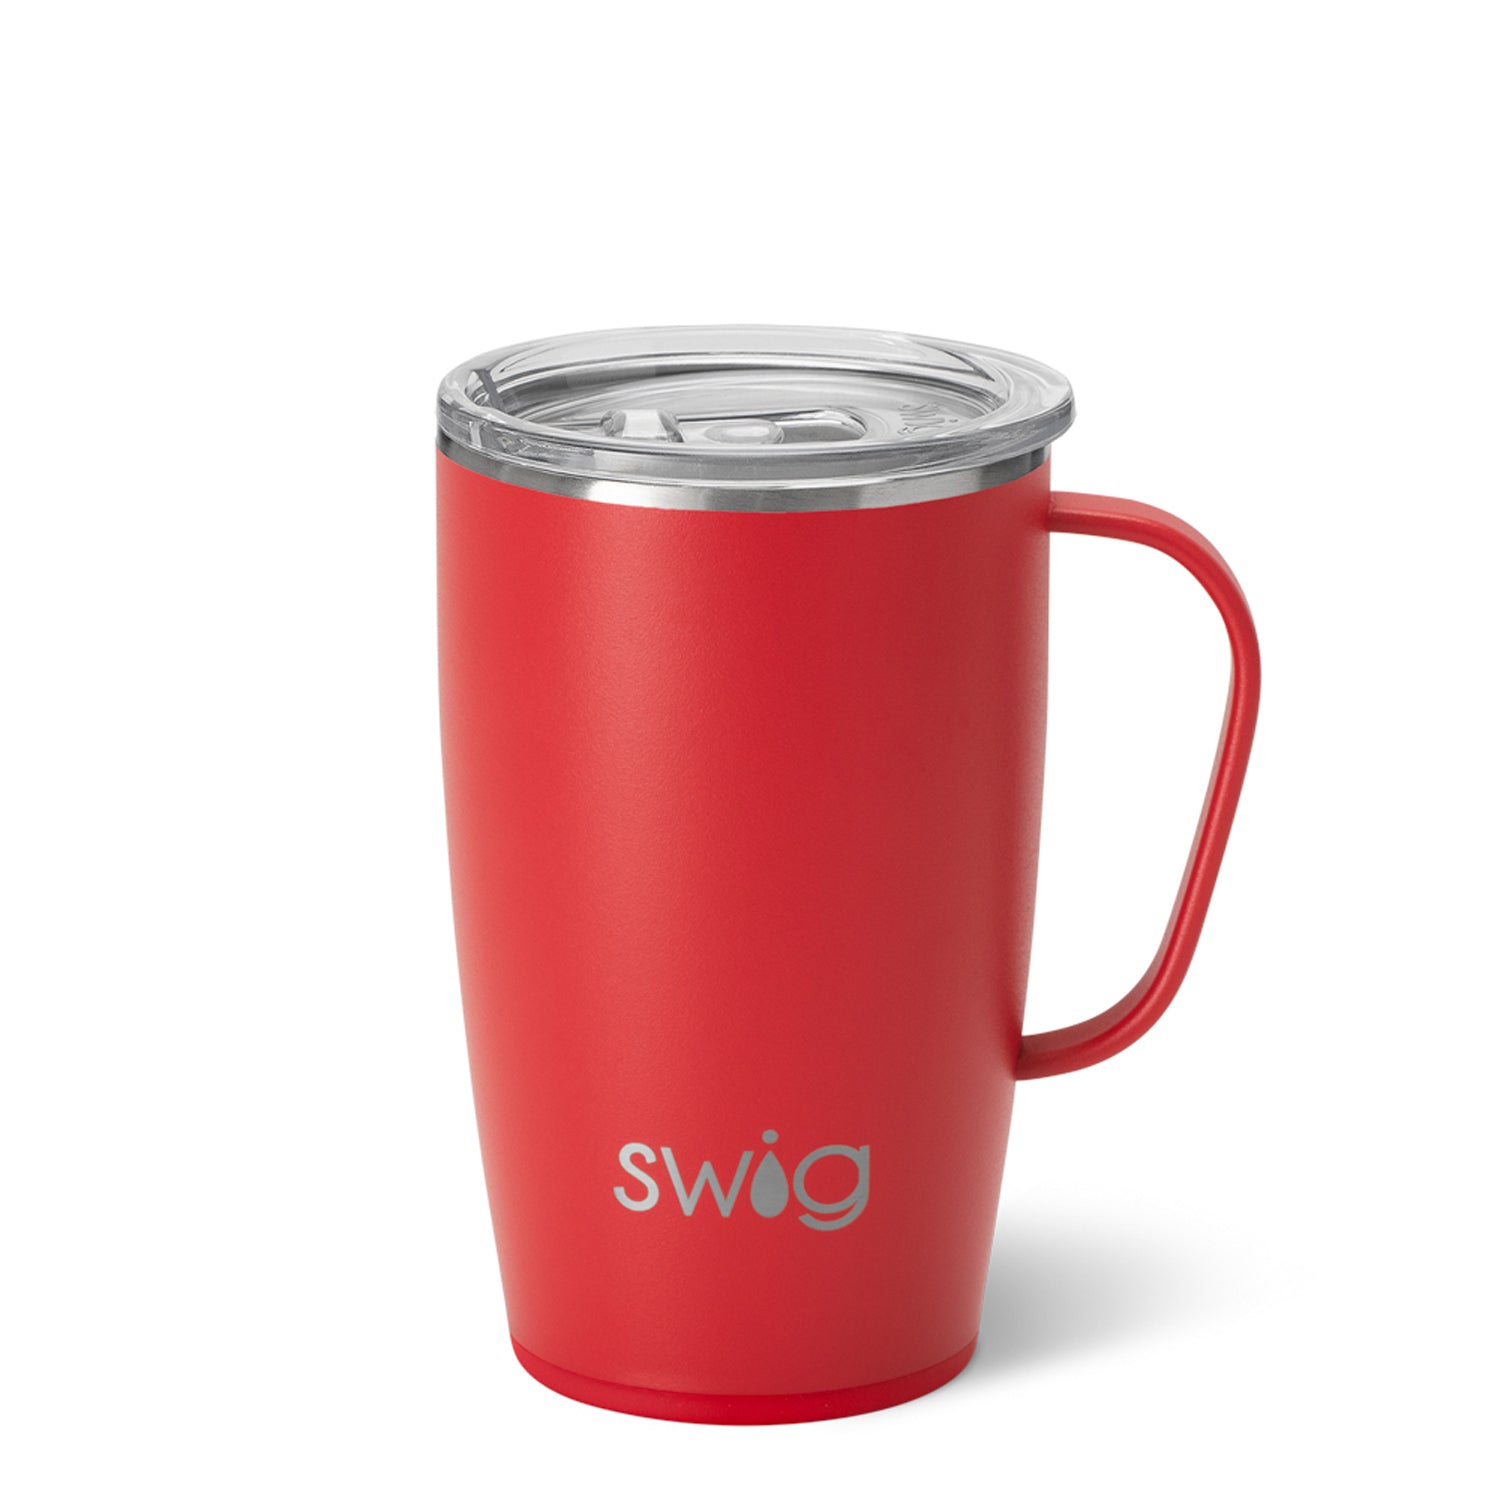 Swig Red 18oz Stainless Steel Travel Mug